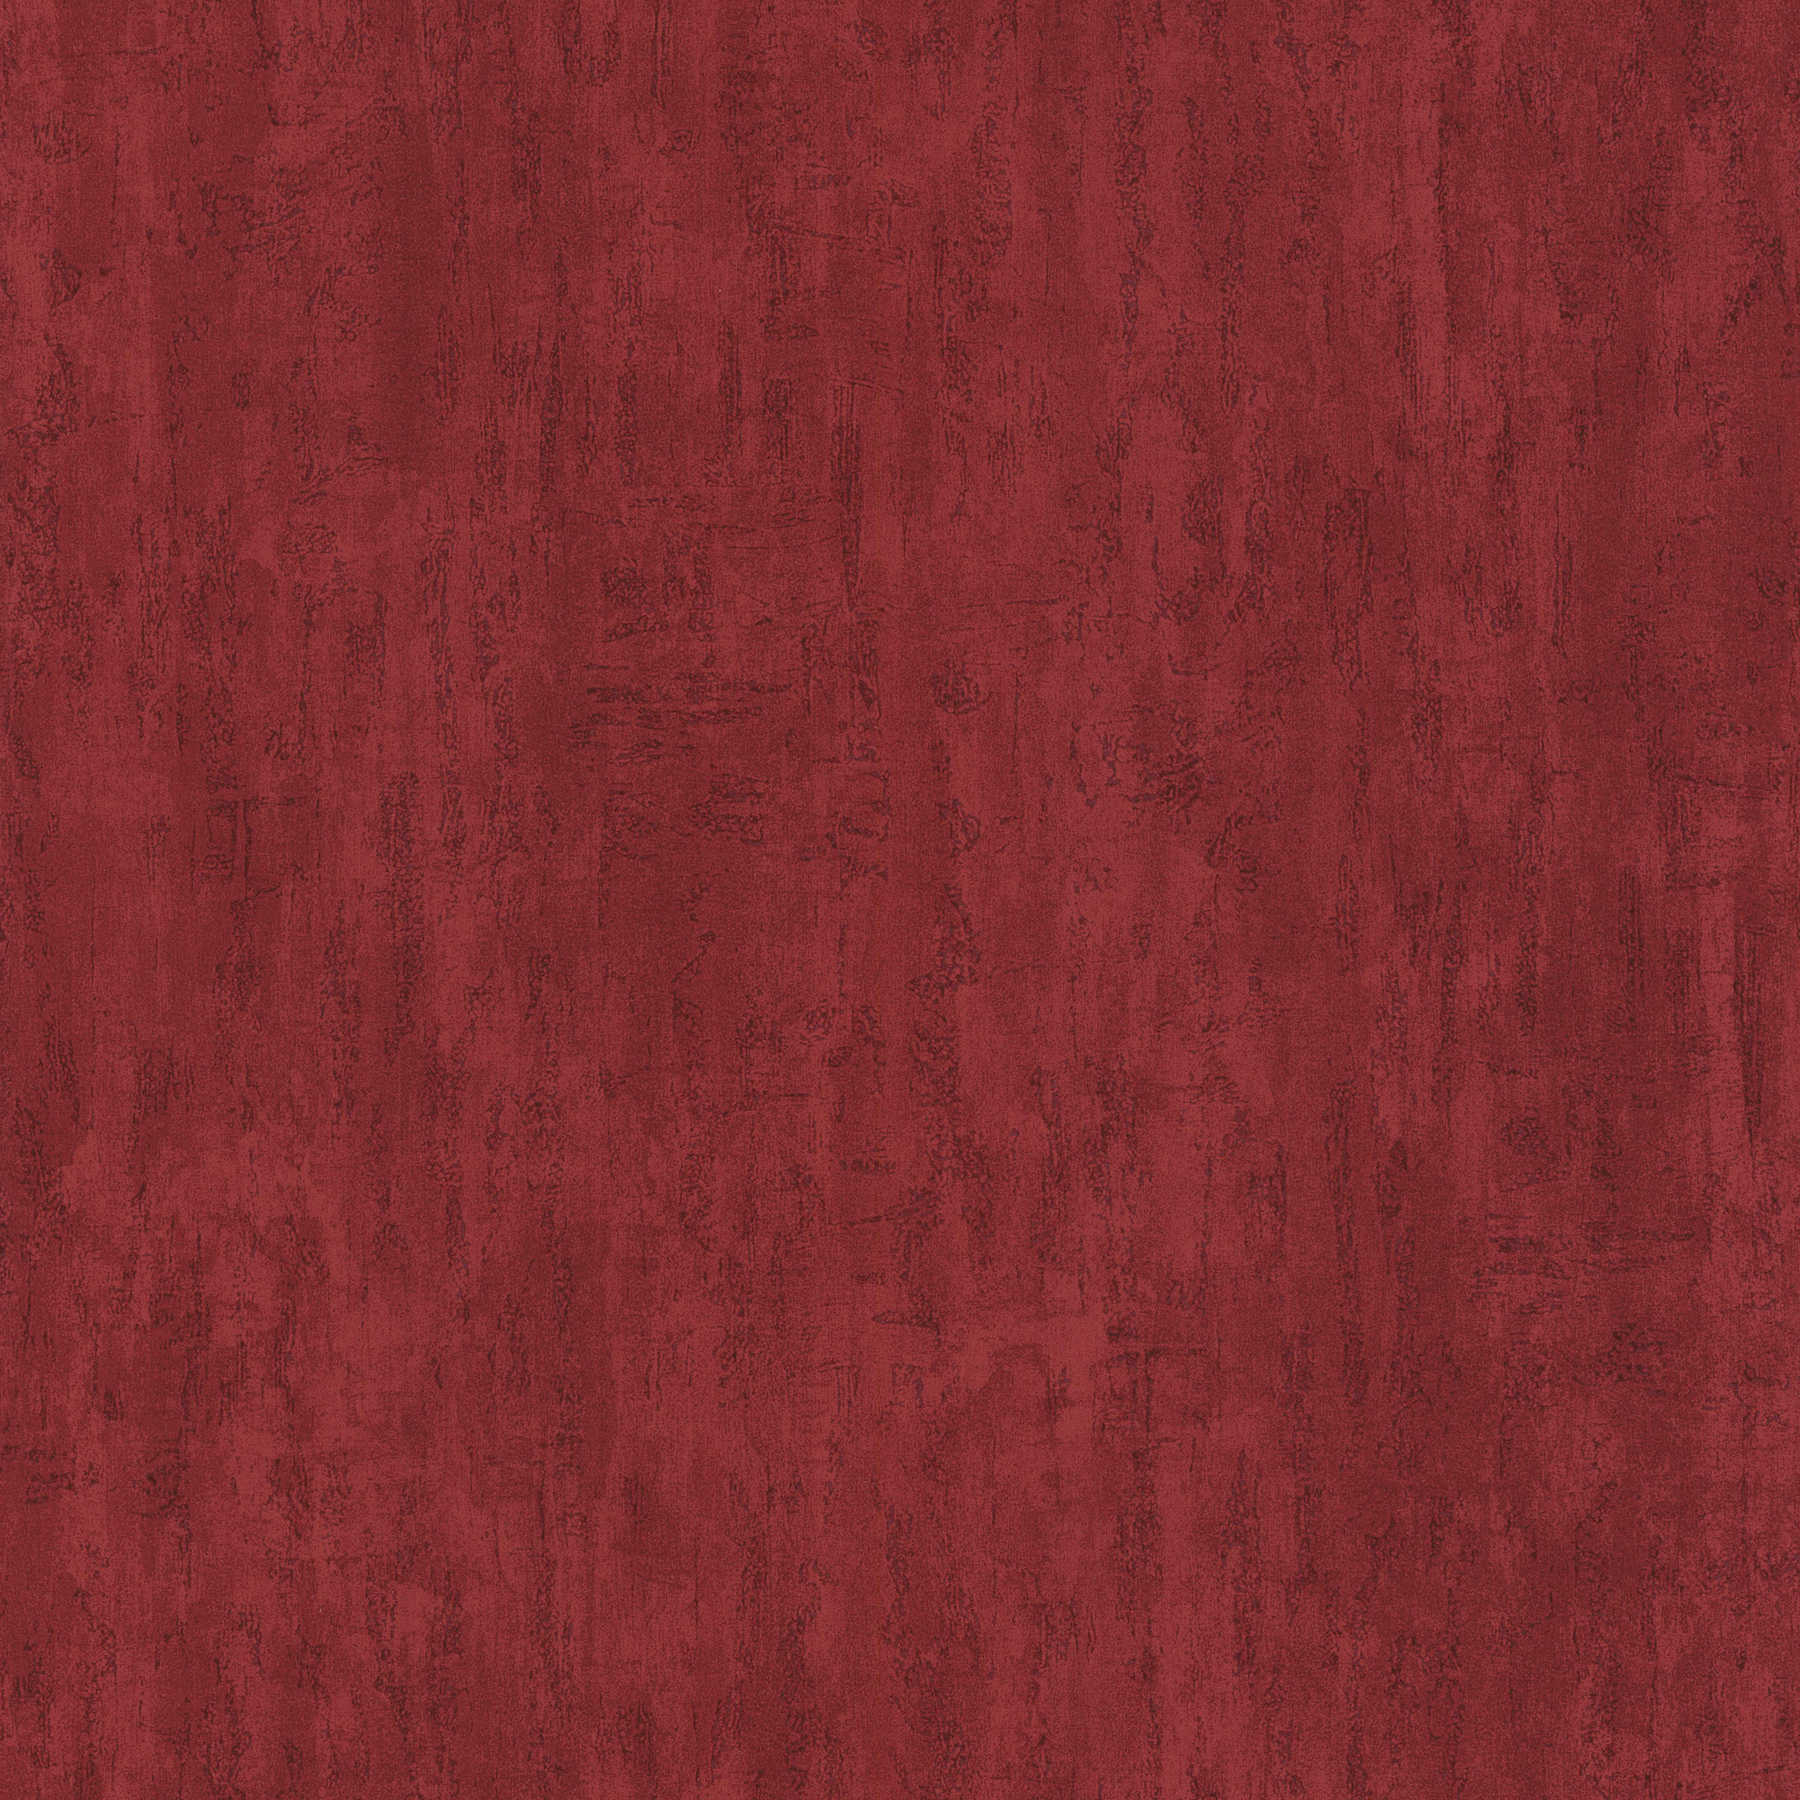 Weinrote Vliestapete mit Strukturmuster – Rot
